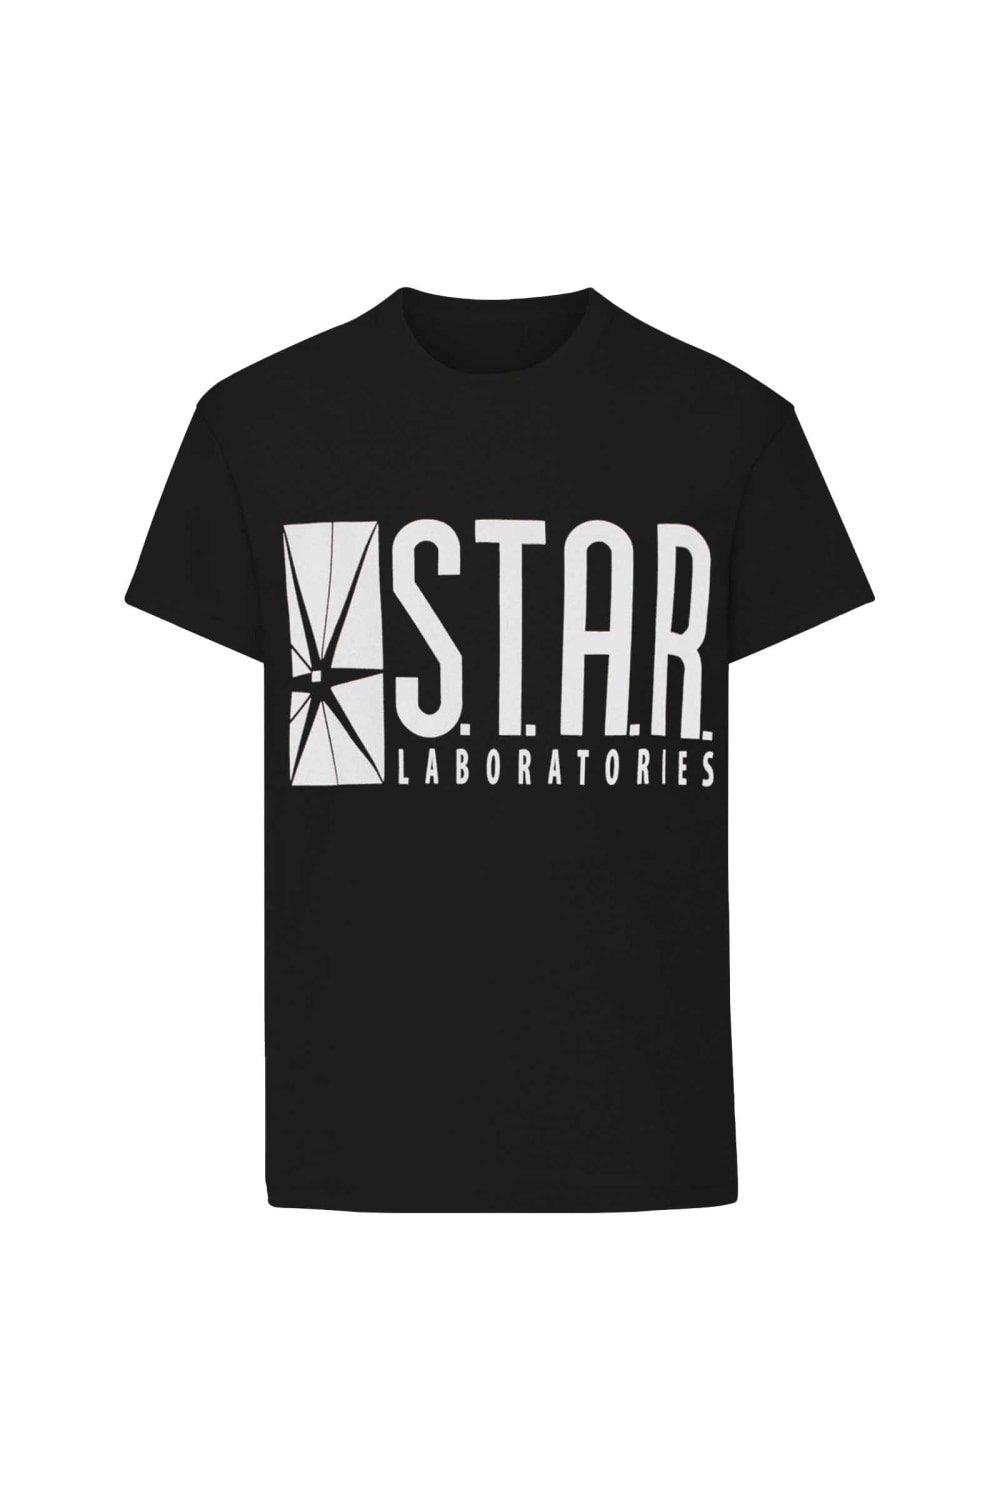 TV STAR Laboratories T-Shirt